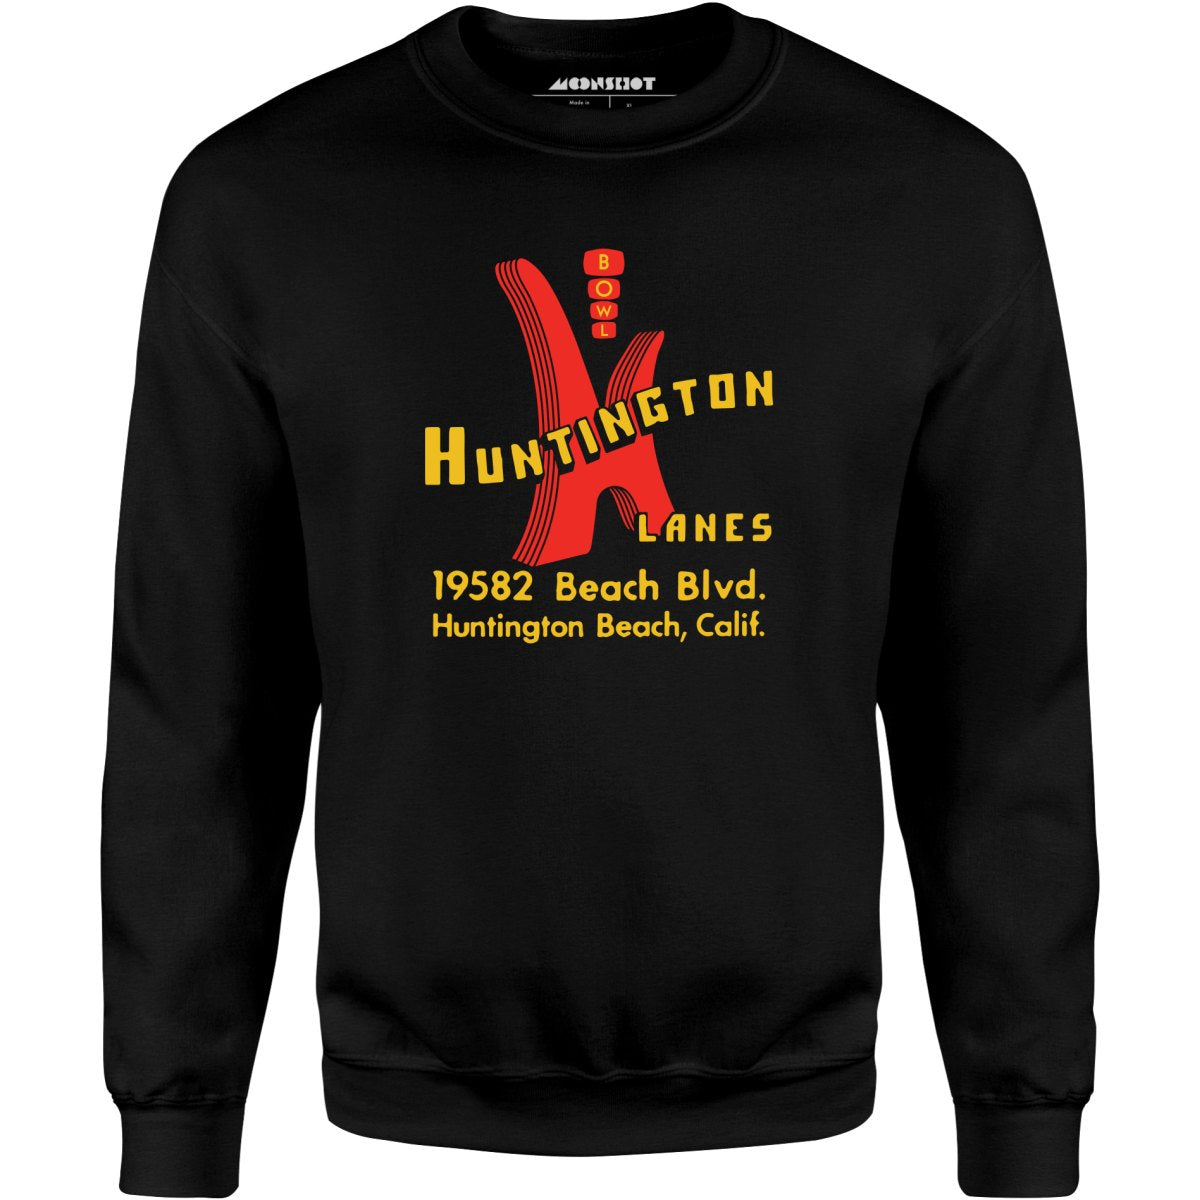 Huntington Lanes - Huntington Beach, CA - Vintage Bowling Alley - Unisex Sweatshirt